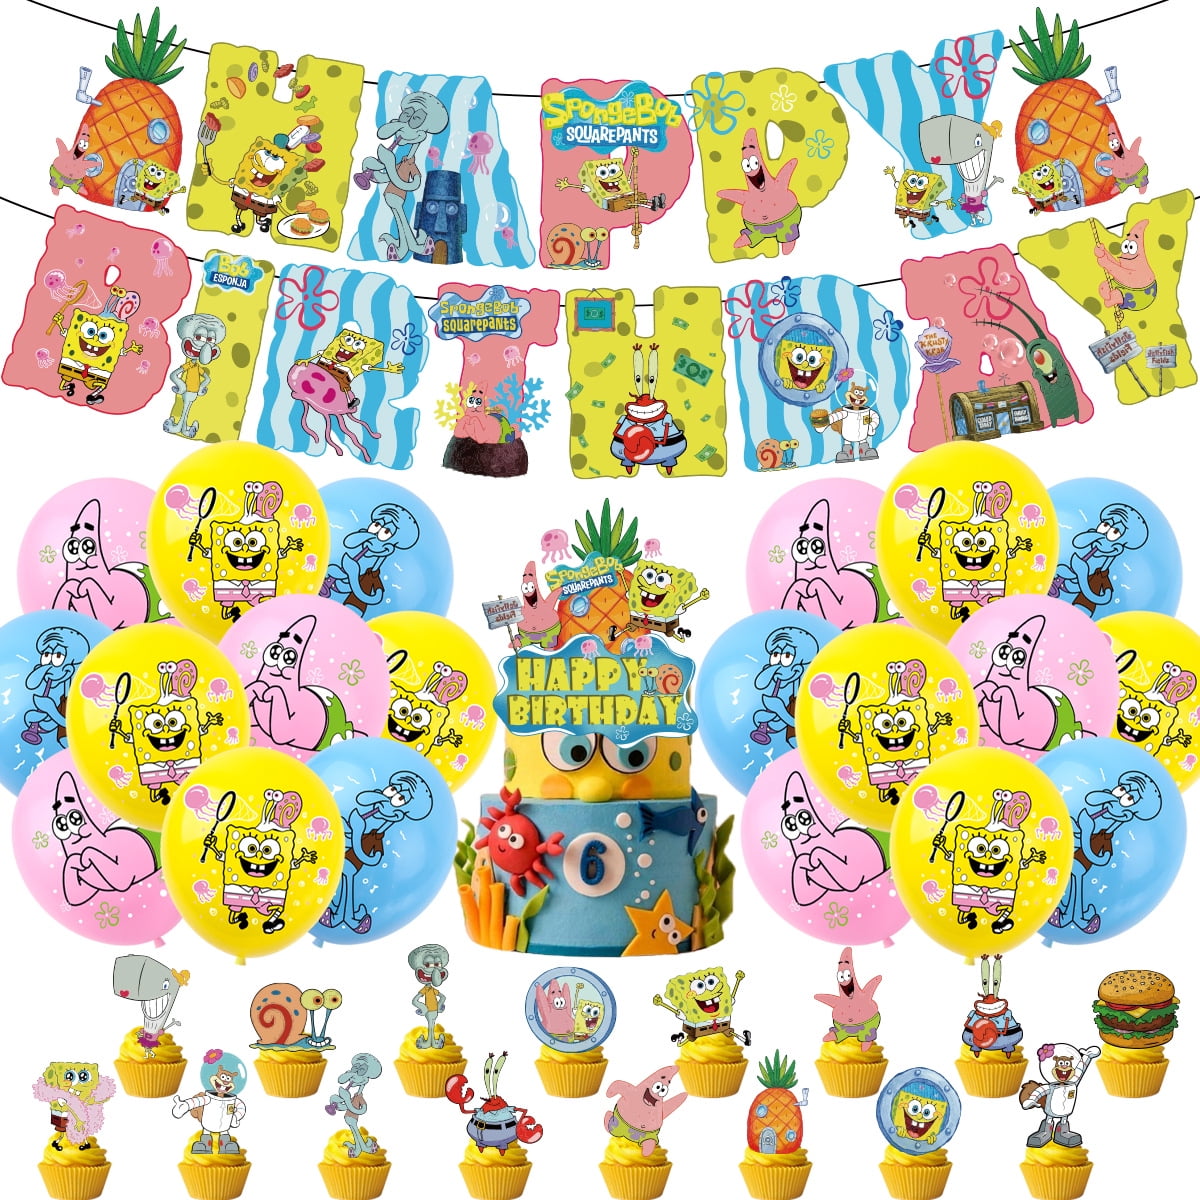 Spongebob Party Decorations - 52 Pcs Cartoon Spongebob Birthday